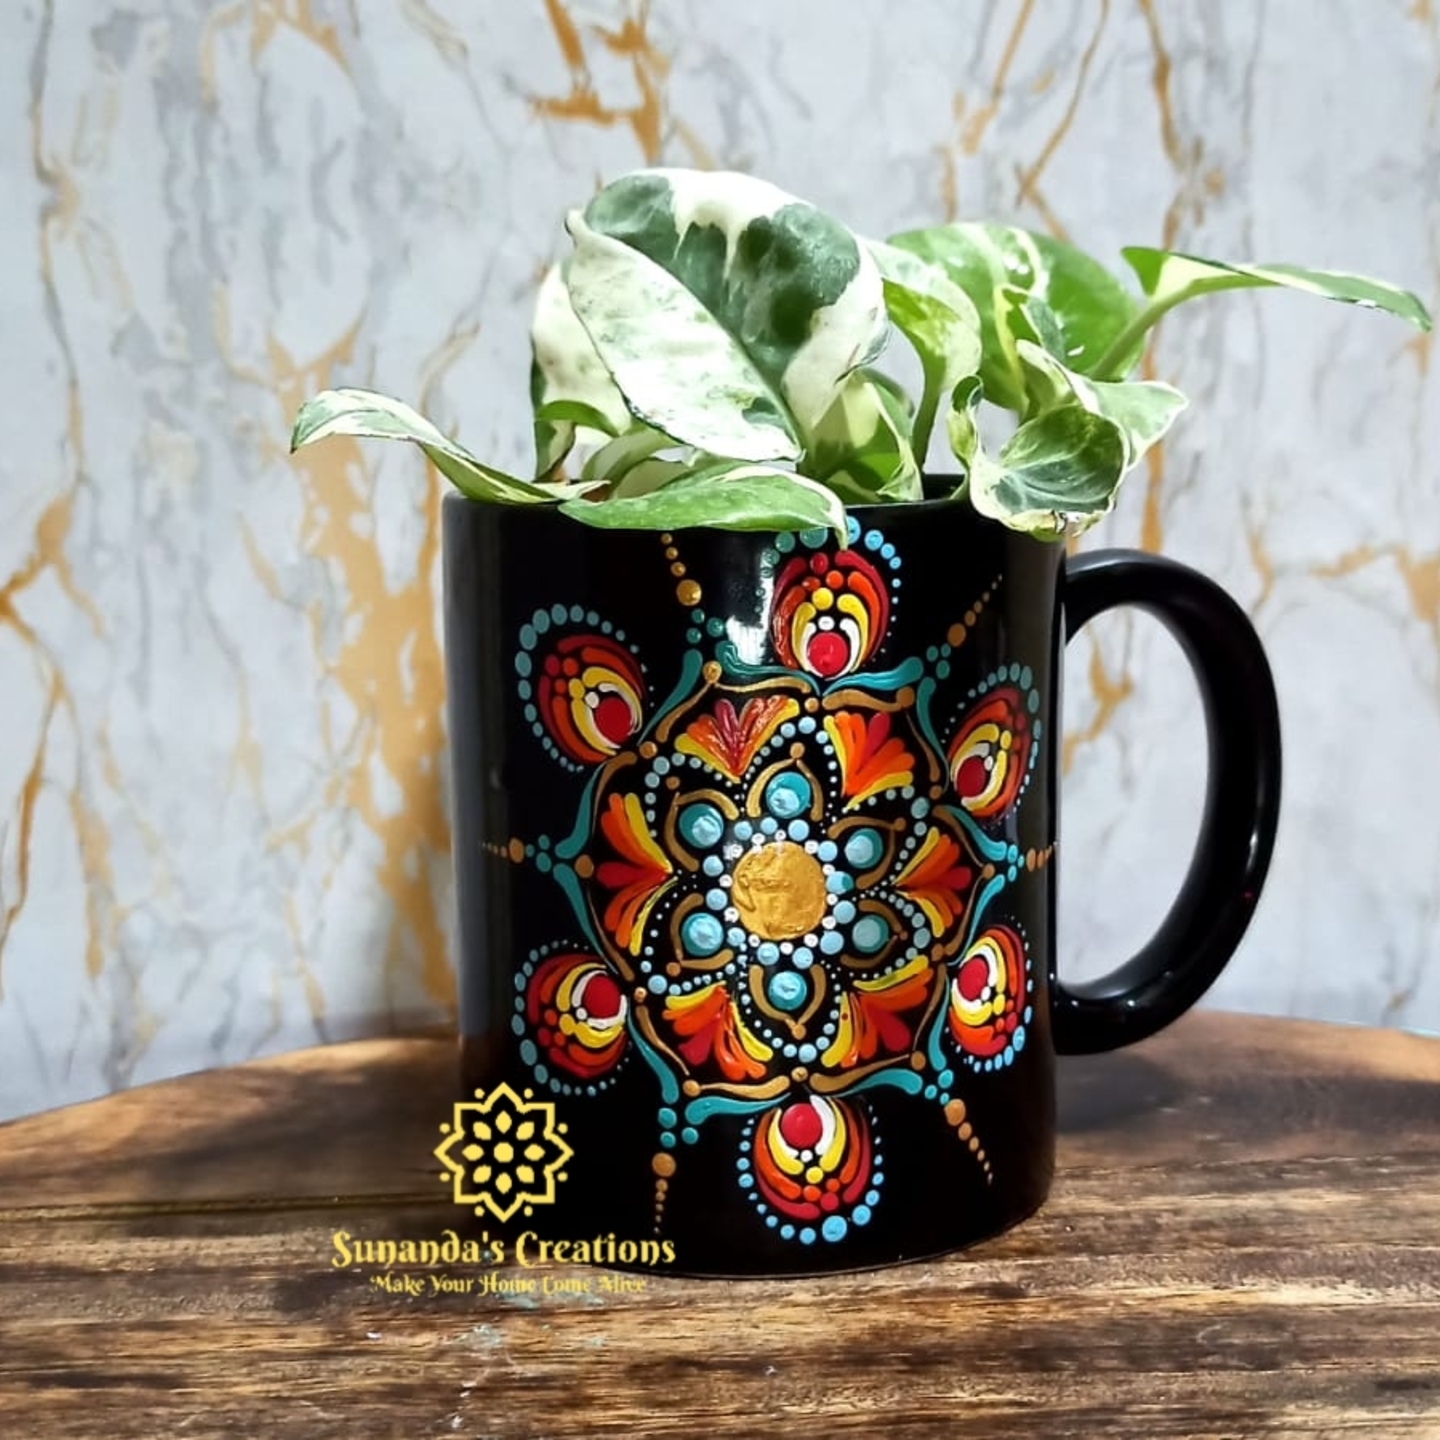 HandpaintedMandala design Coffee Mug Planter 320ml